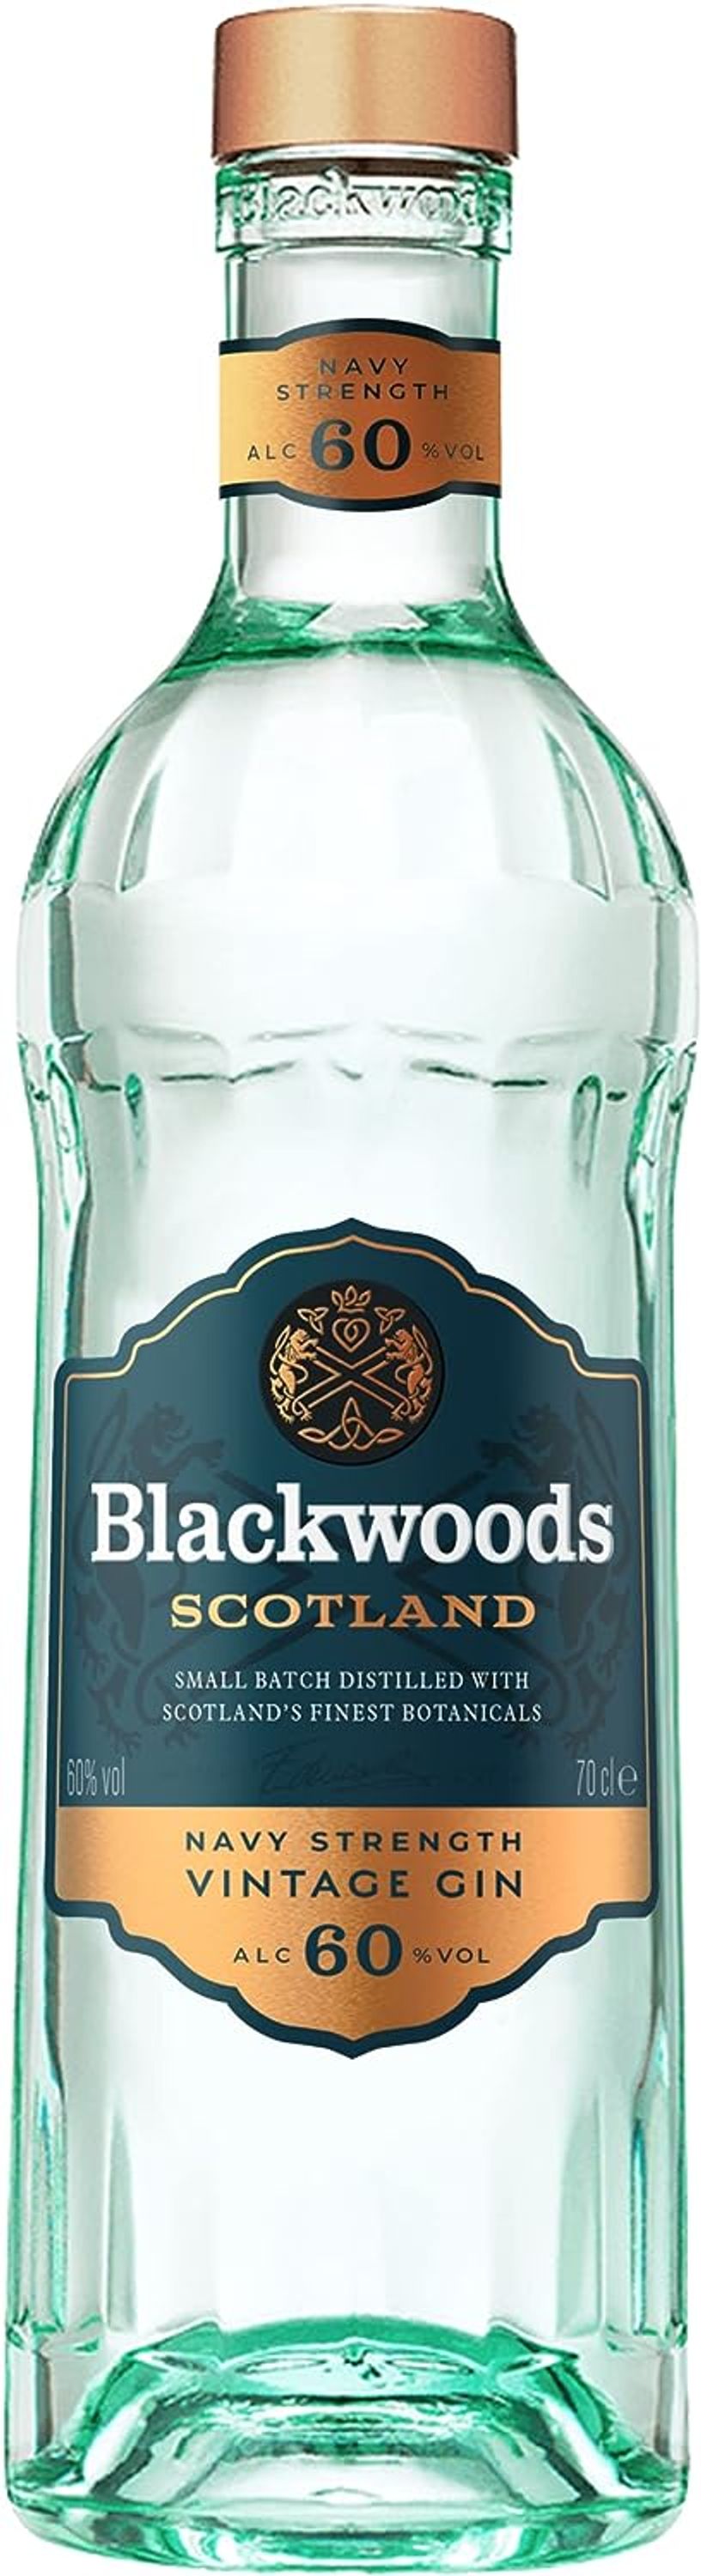 Blackwood's Vintage Gin Navy Strength 0,7l, alc. 60 Vol.-%